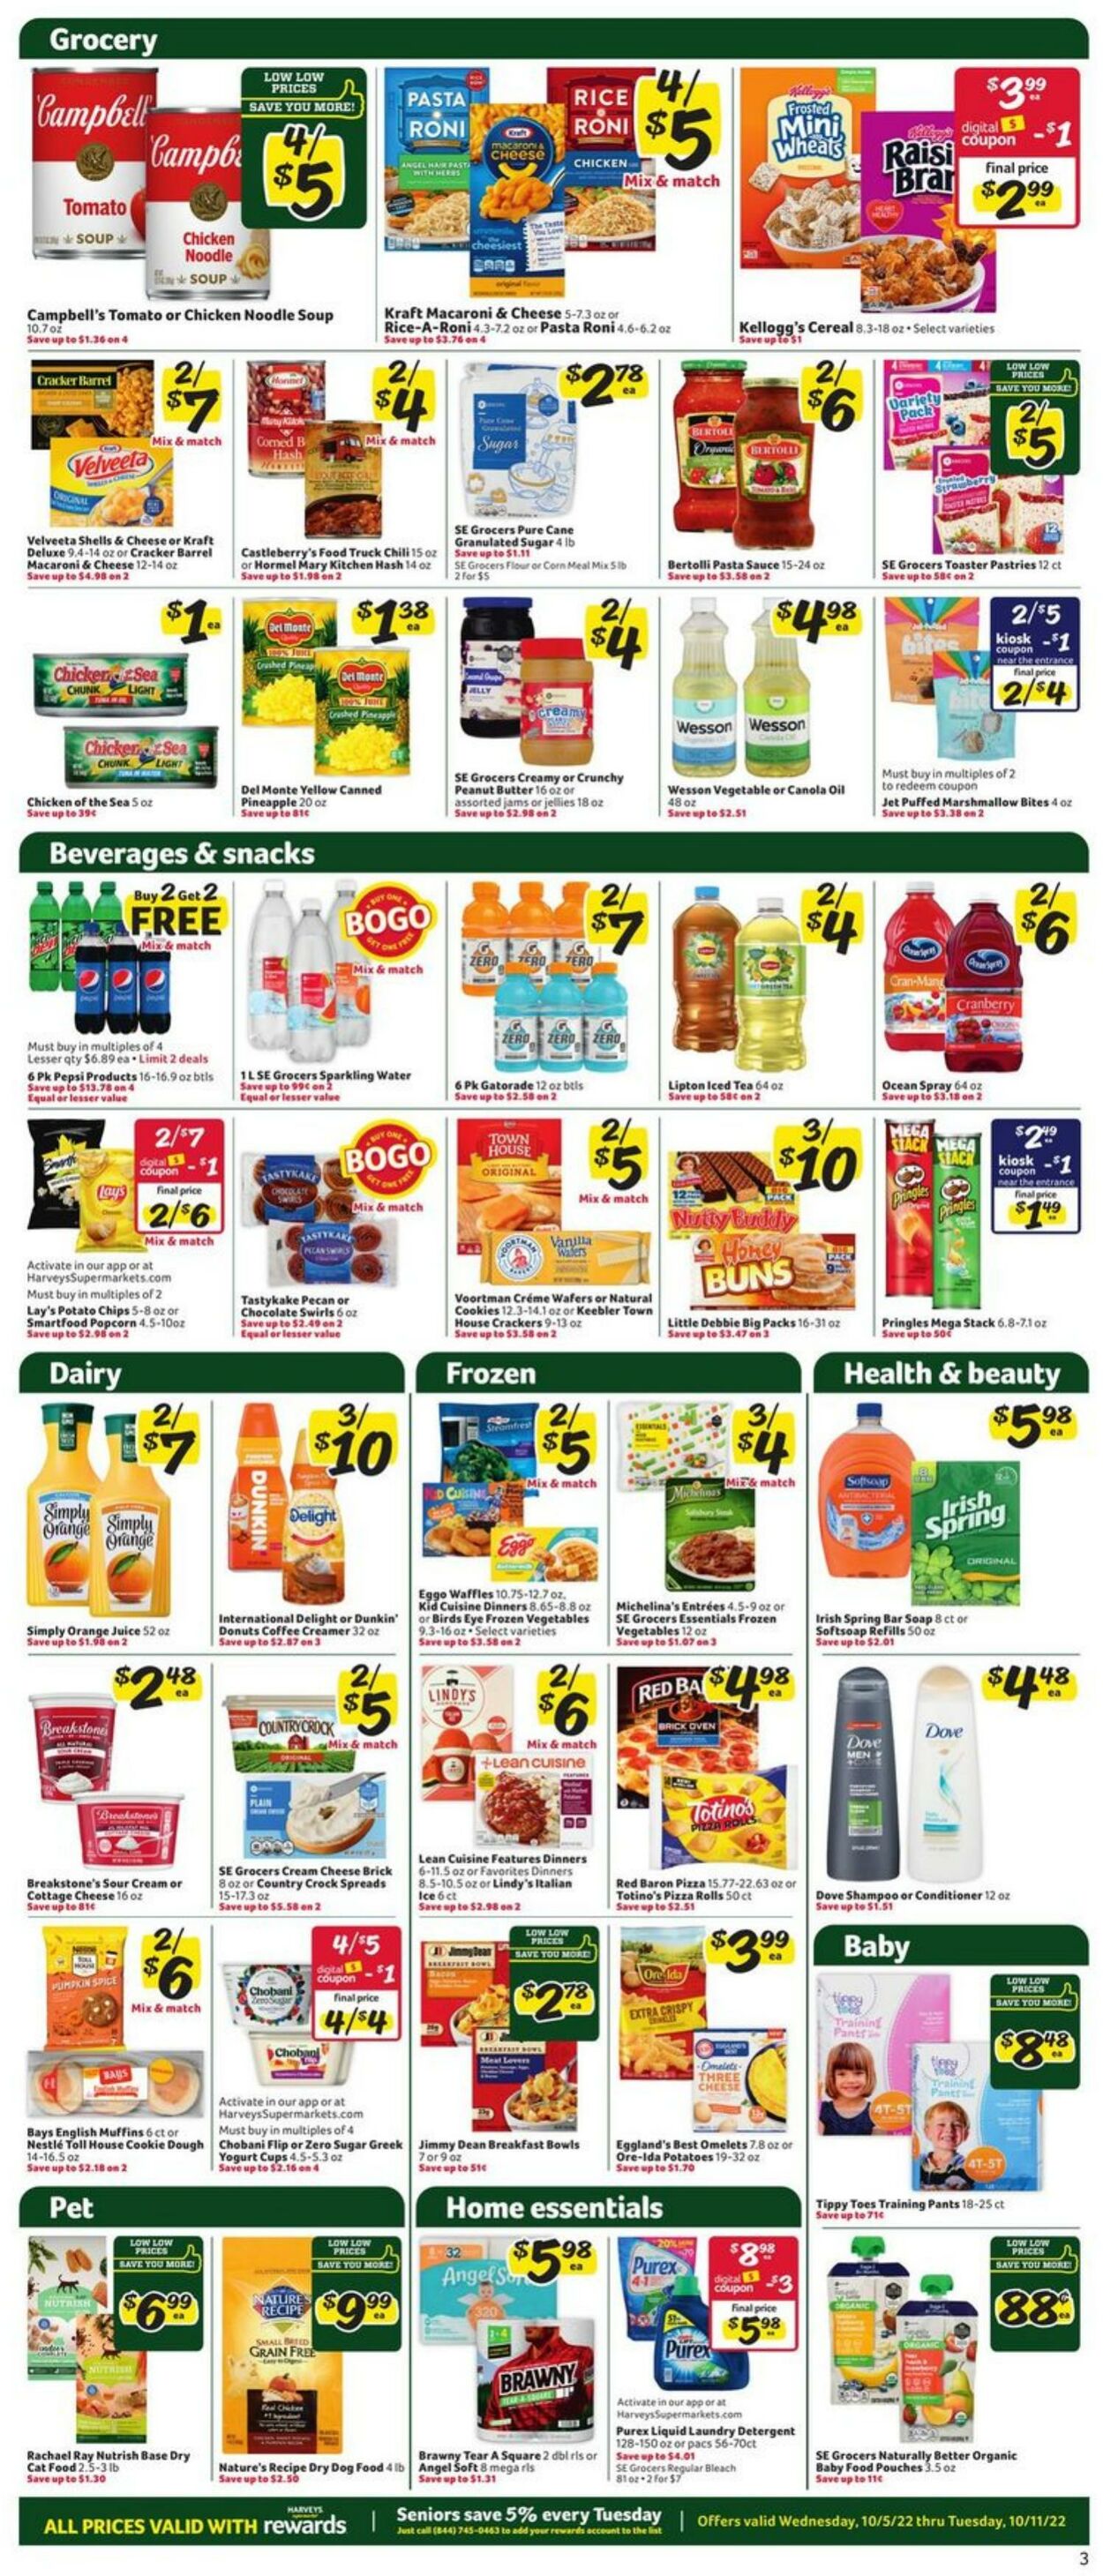 Weekly ad Harvey's Supermarkets 10/05/2022 - 10/11/2022